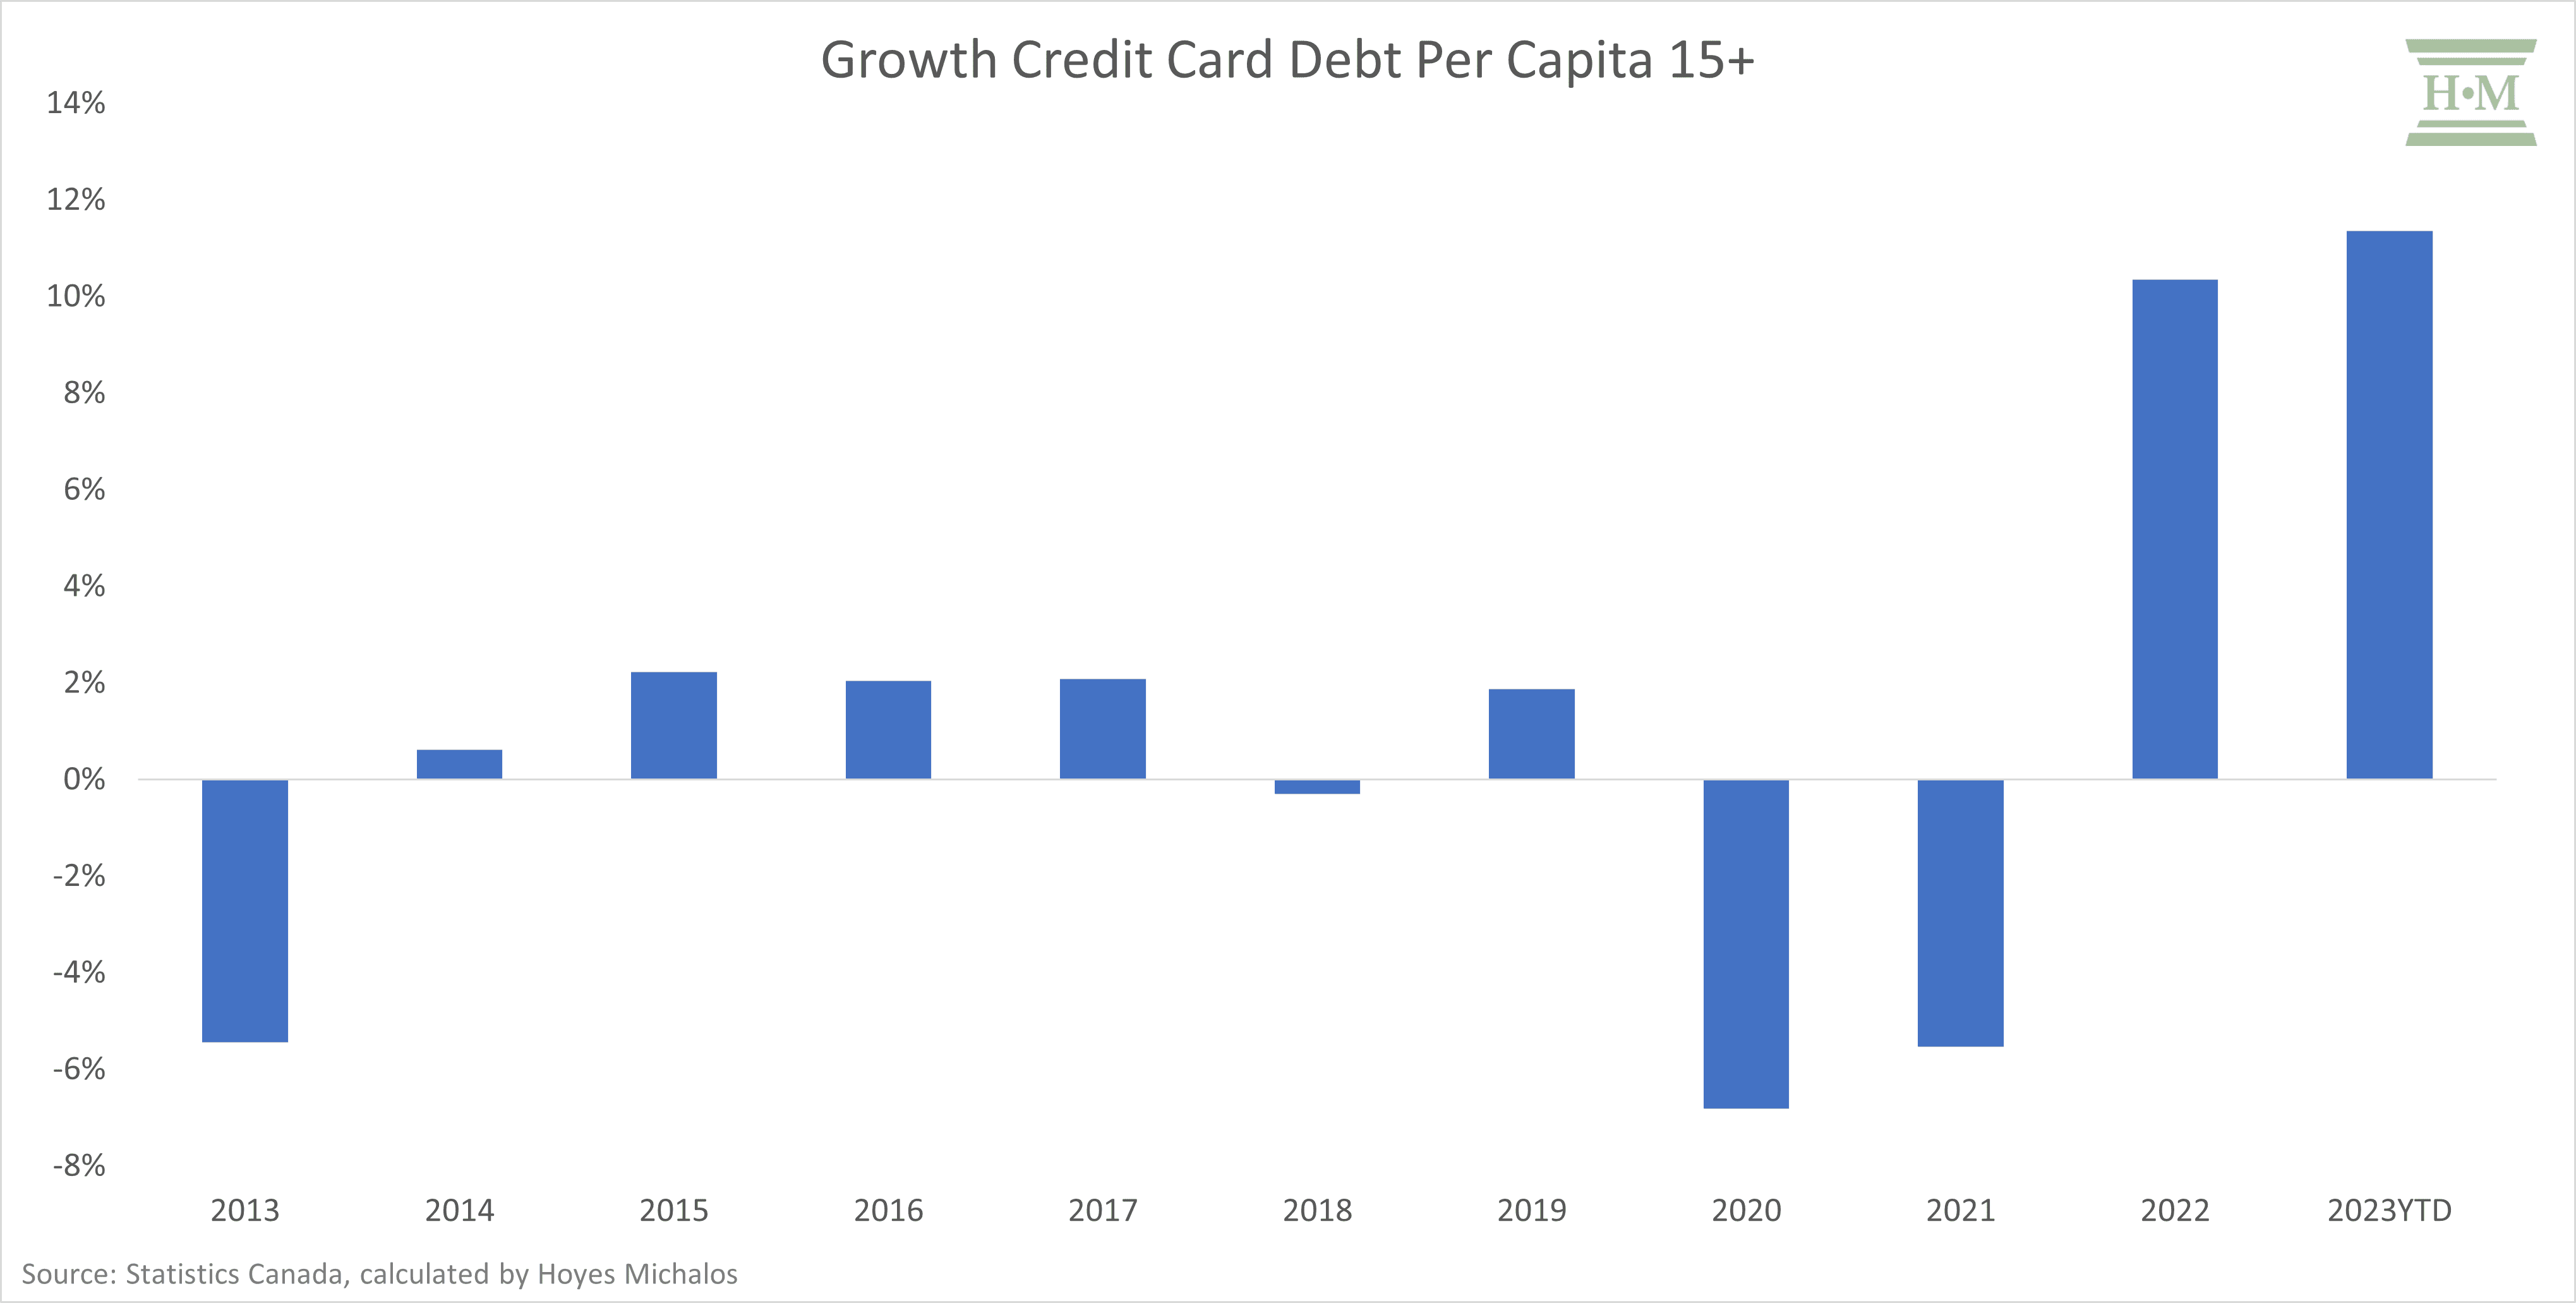 Growth Credit Card Debt Per Capita 15